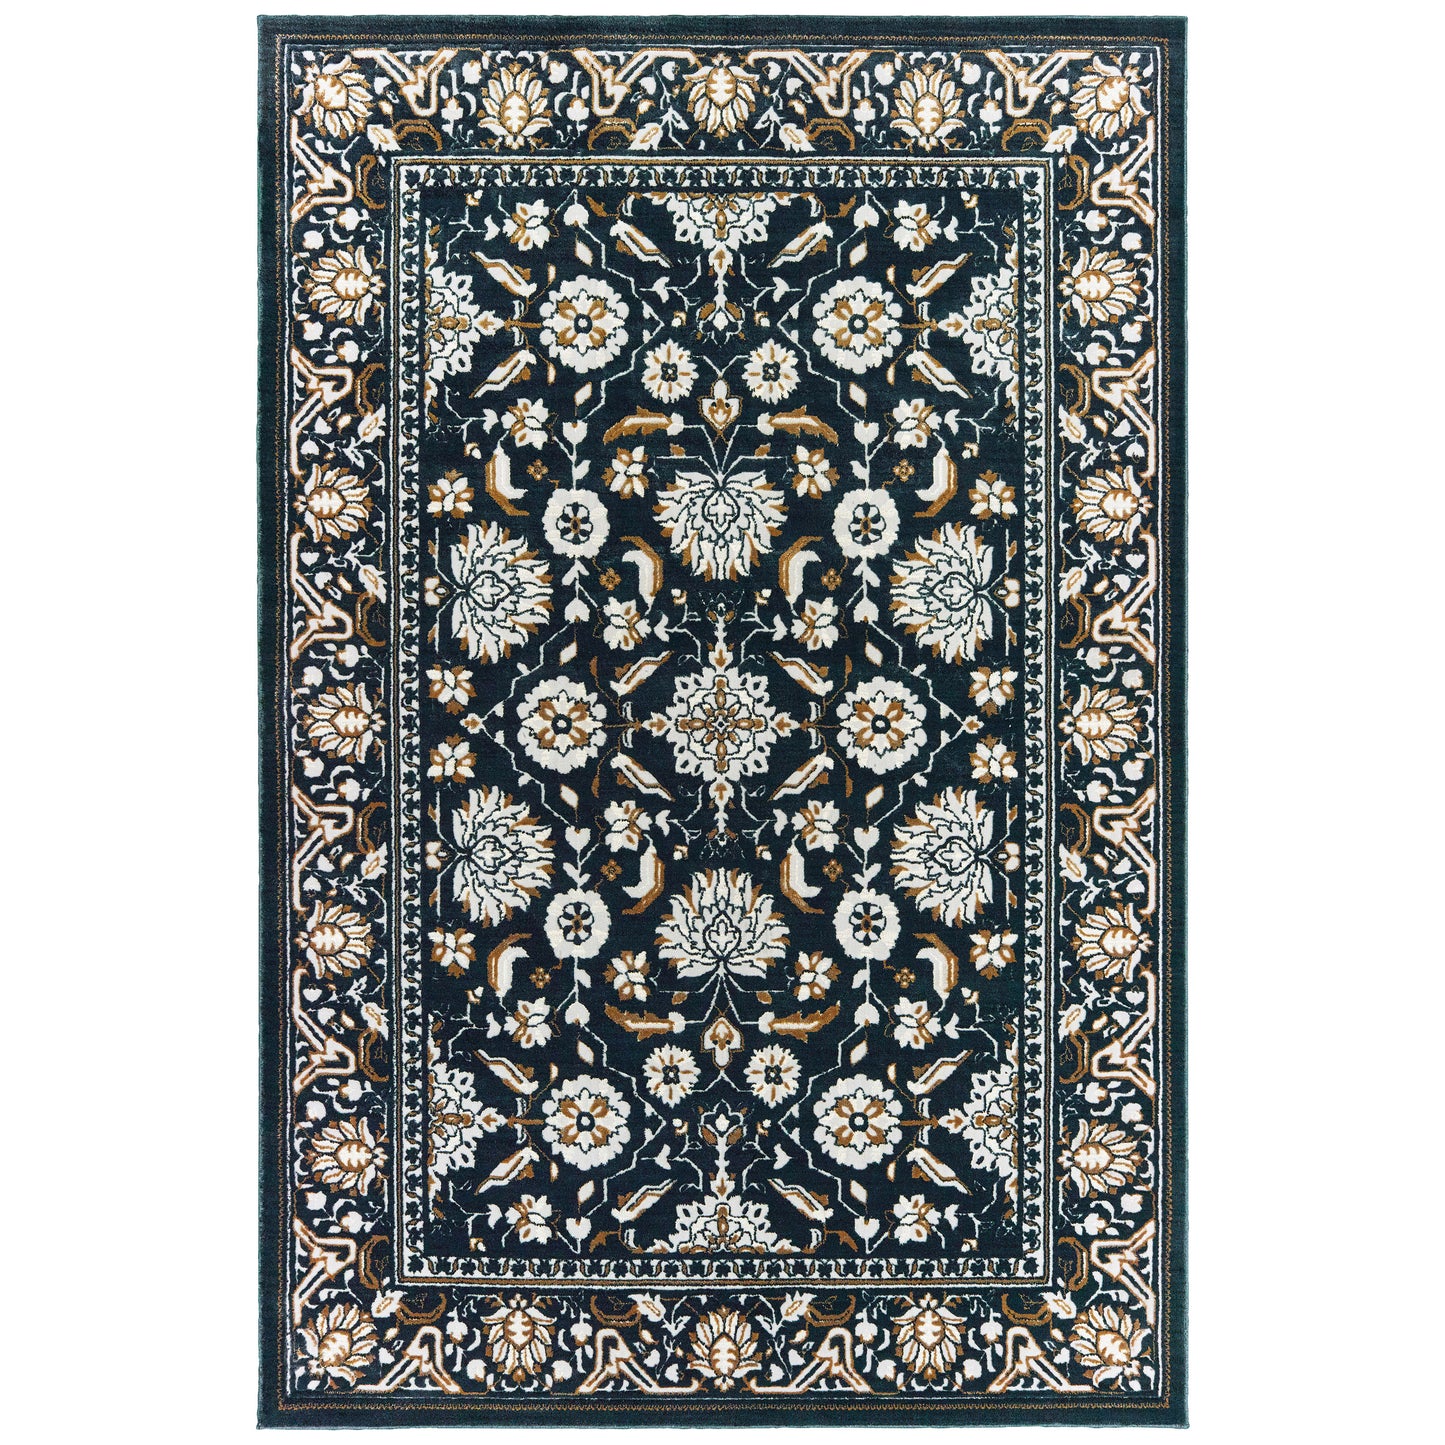 BOWEN Oriental Power-Loomed Synthetic Blend Indoor Area Rug by Oriental Weavers